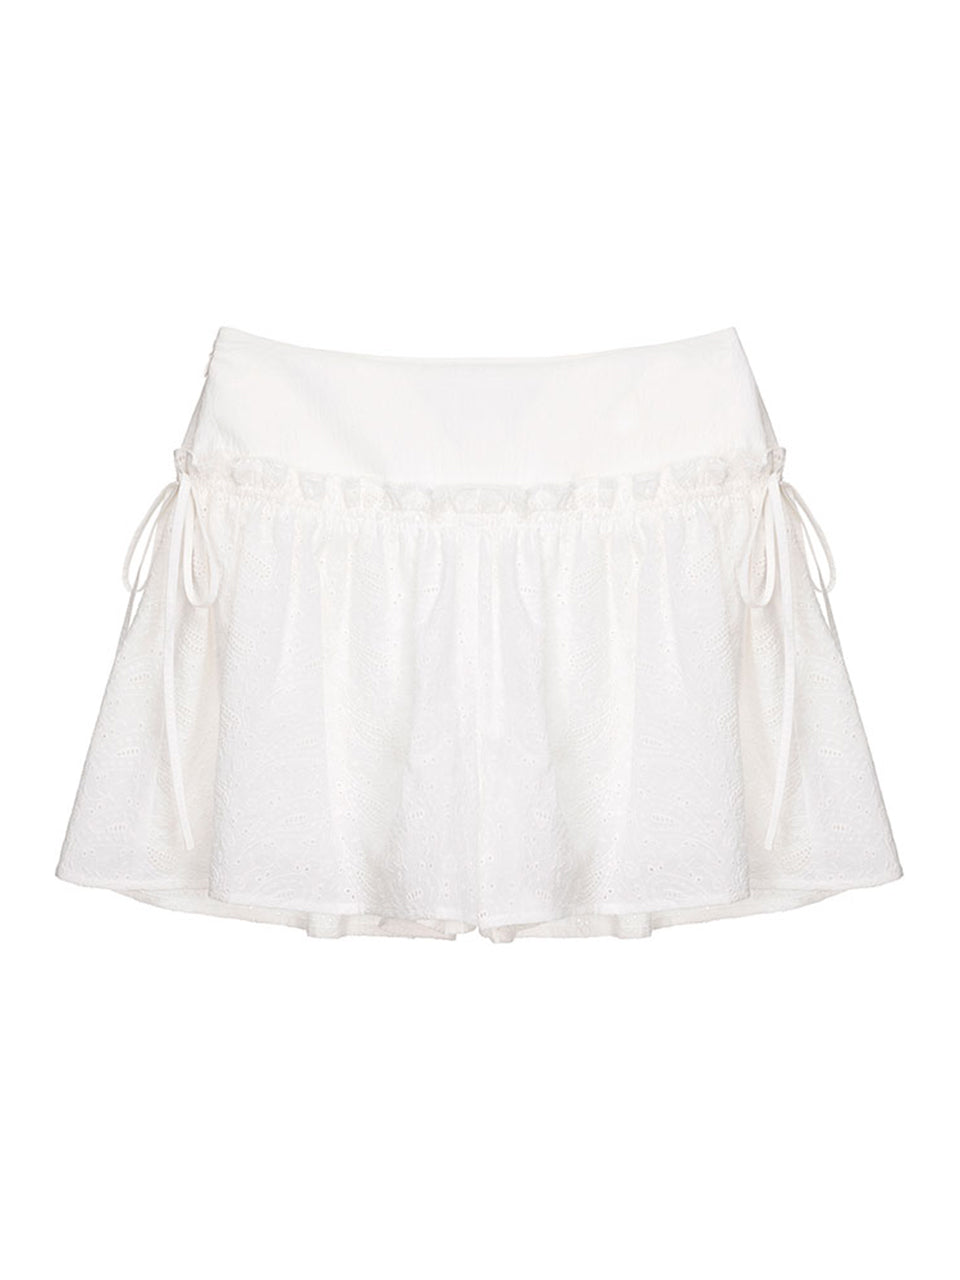 Lace Ribbon Short Pants in White